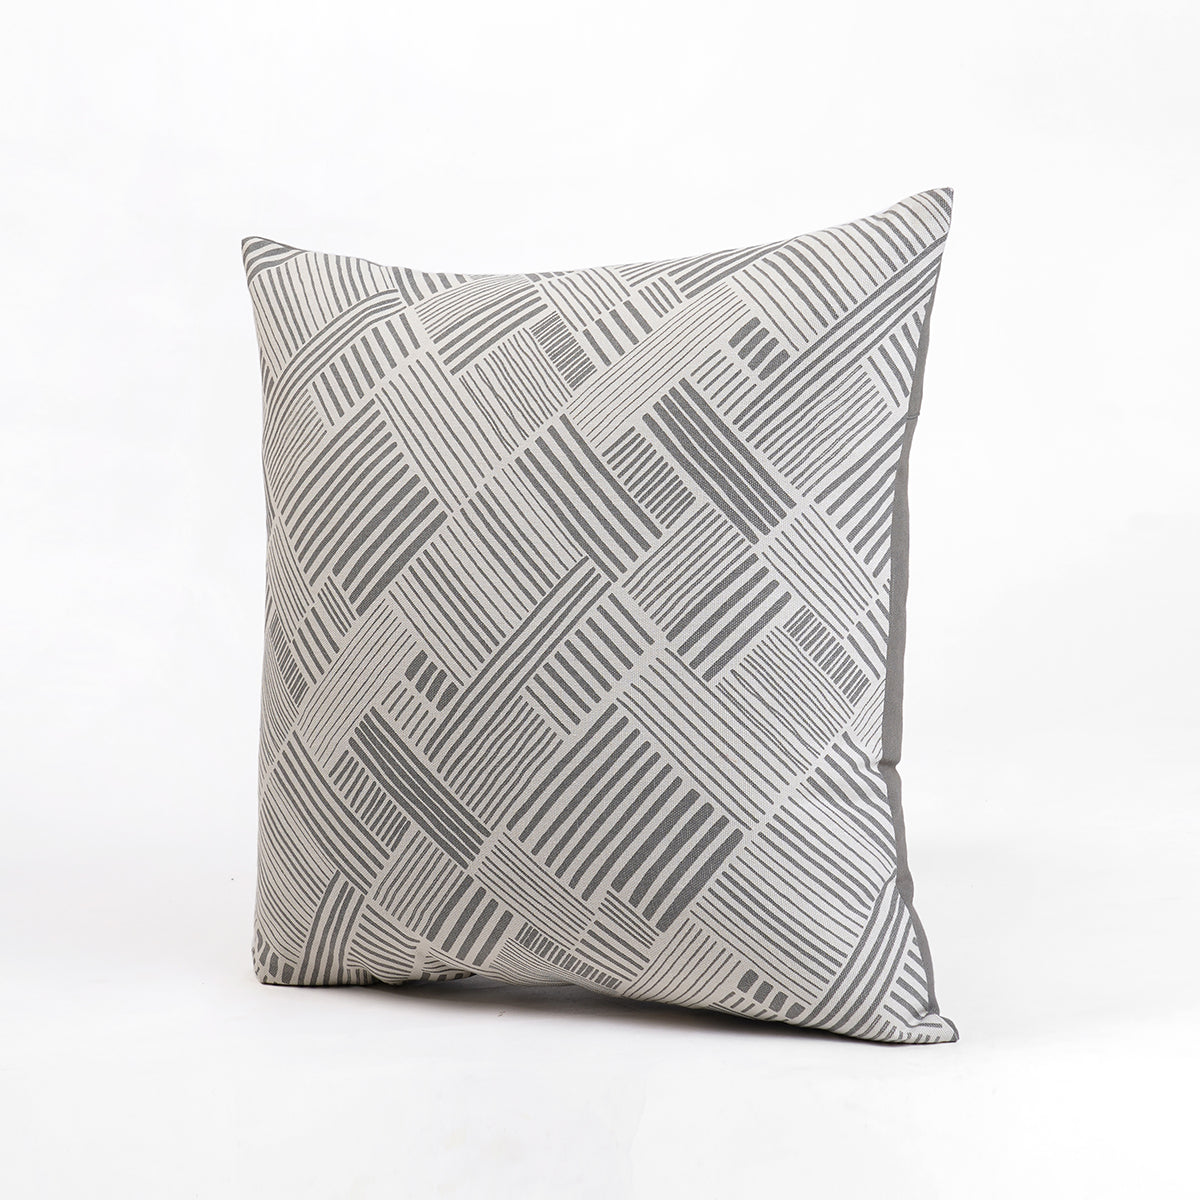 MODERN RETRO - Grey throw pillow cover, geometrical print, cotton pillow, sizes available